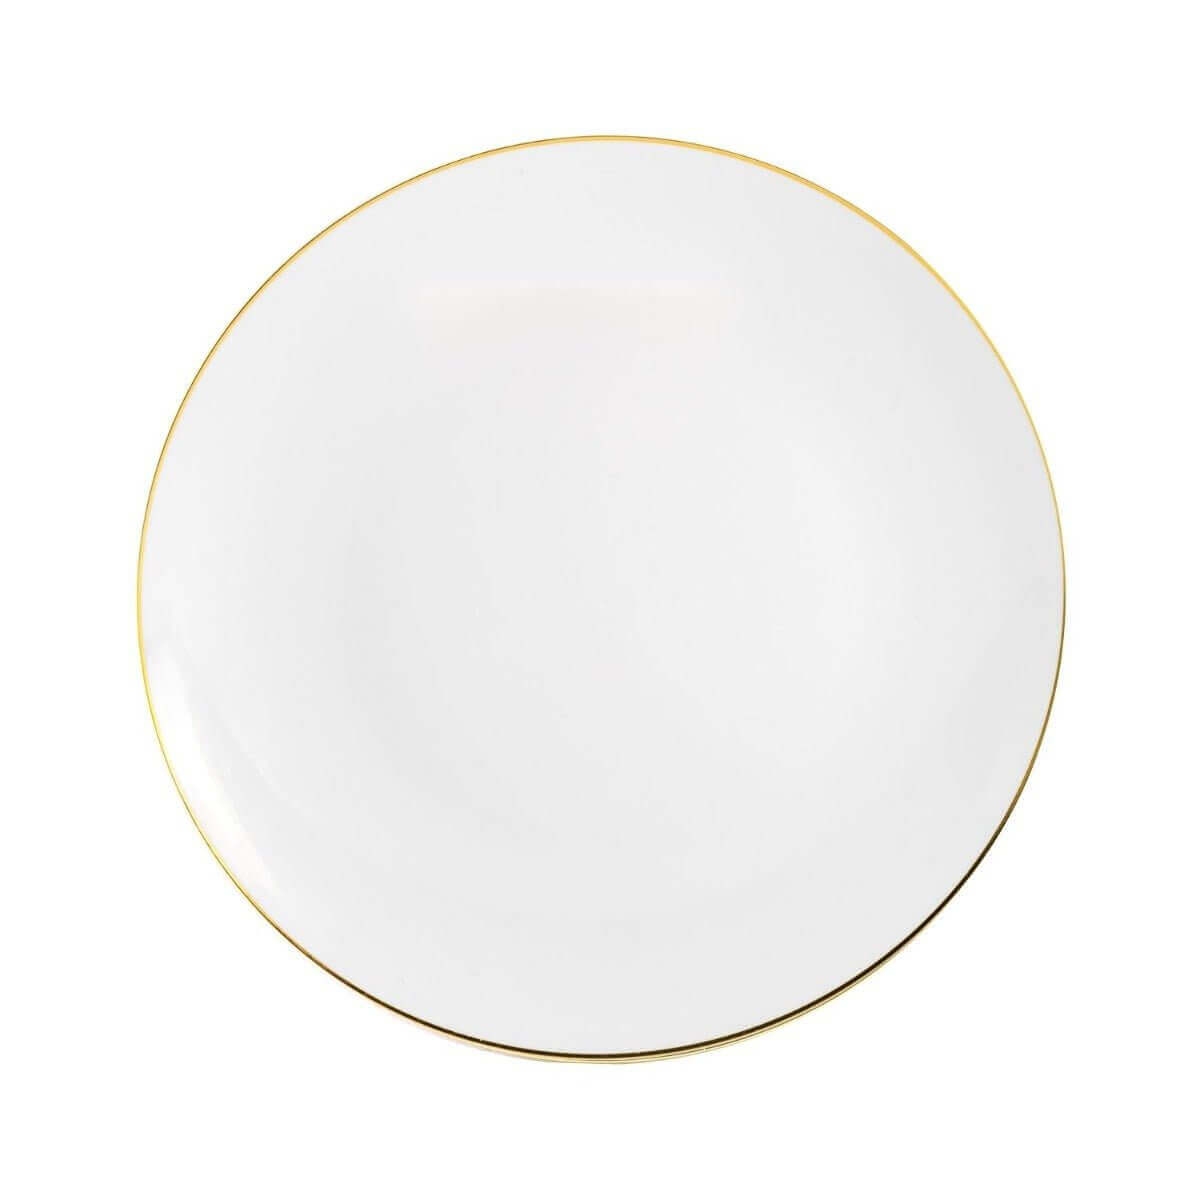 10" Classic Gold Design Plastic Plates (40 Count) - Yom Tov Settings